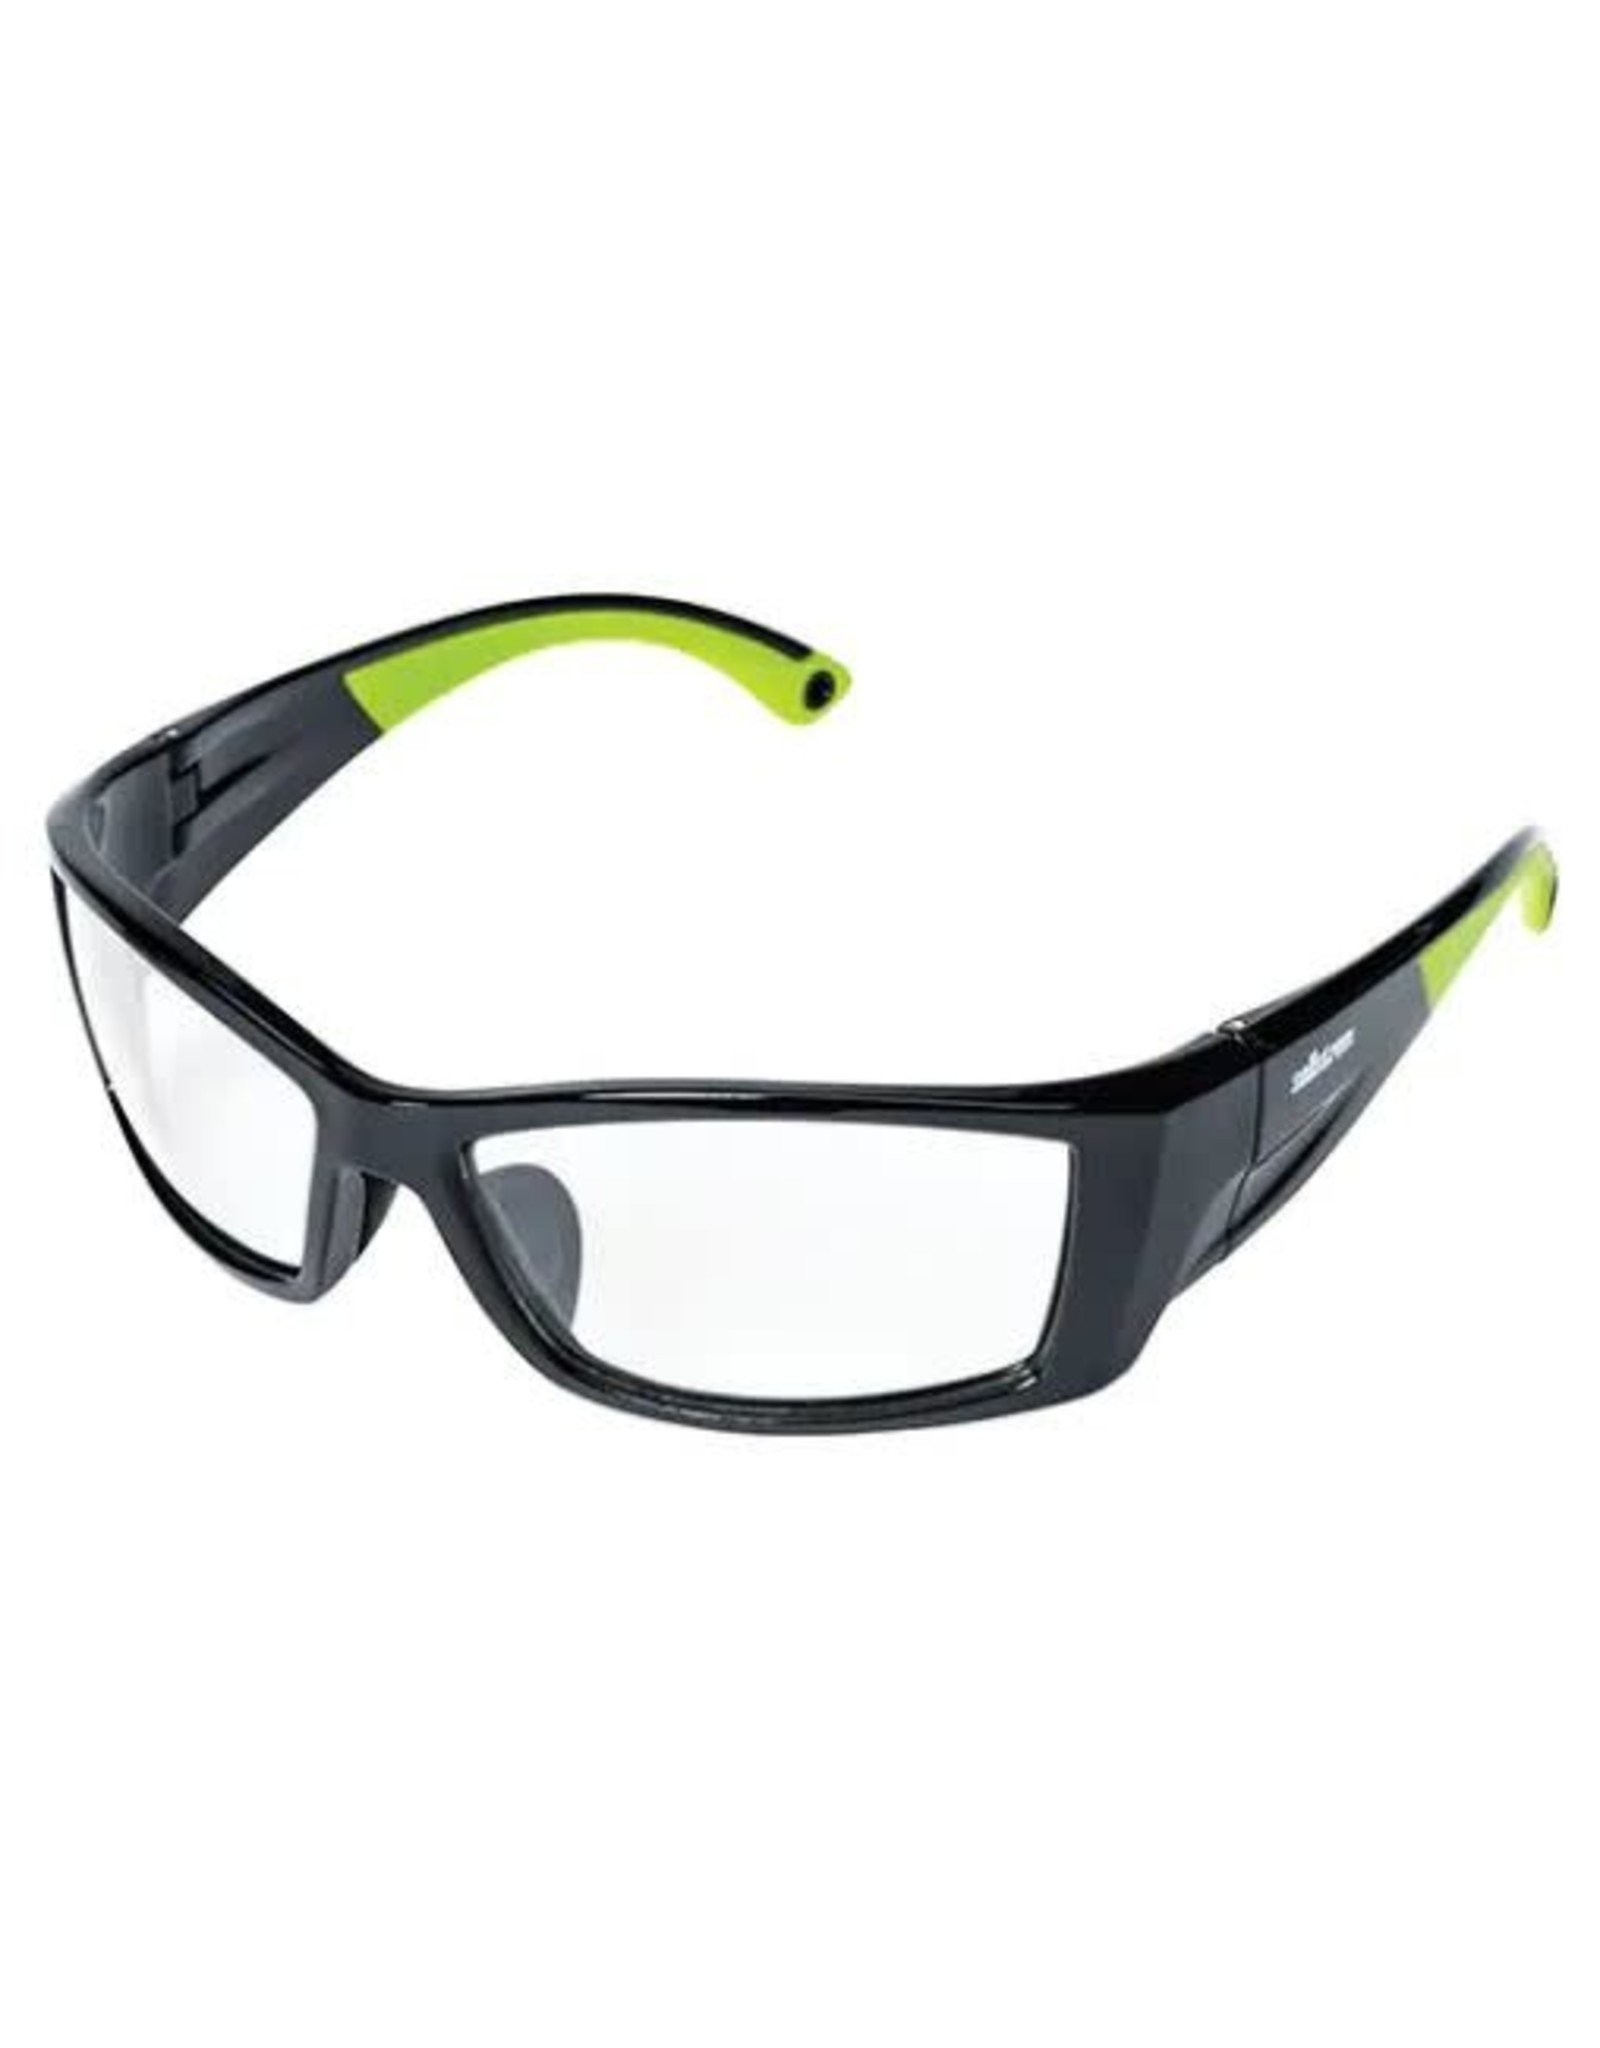 Sellstrom XP460 Safety Glasses, Full Frame, A/F